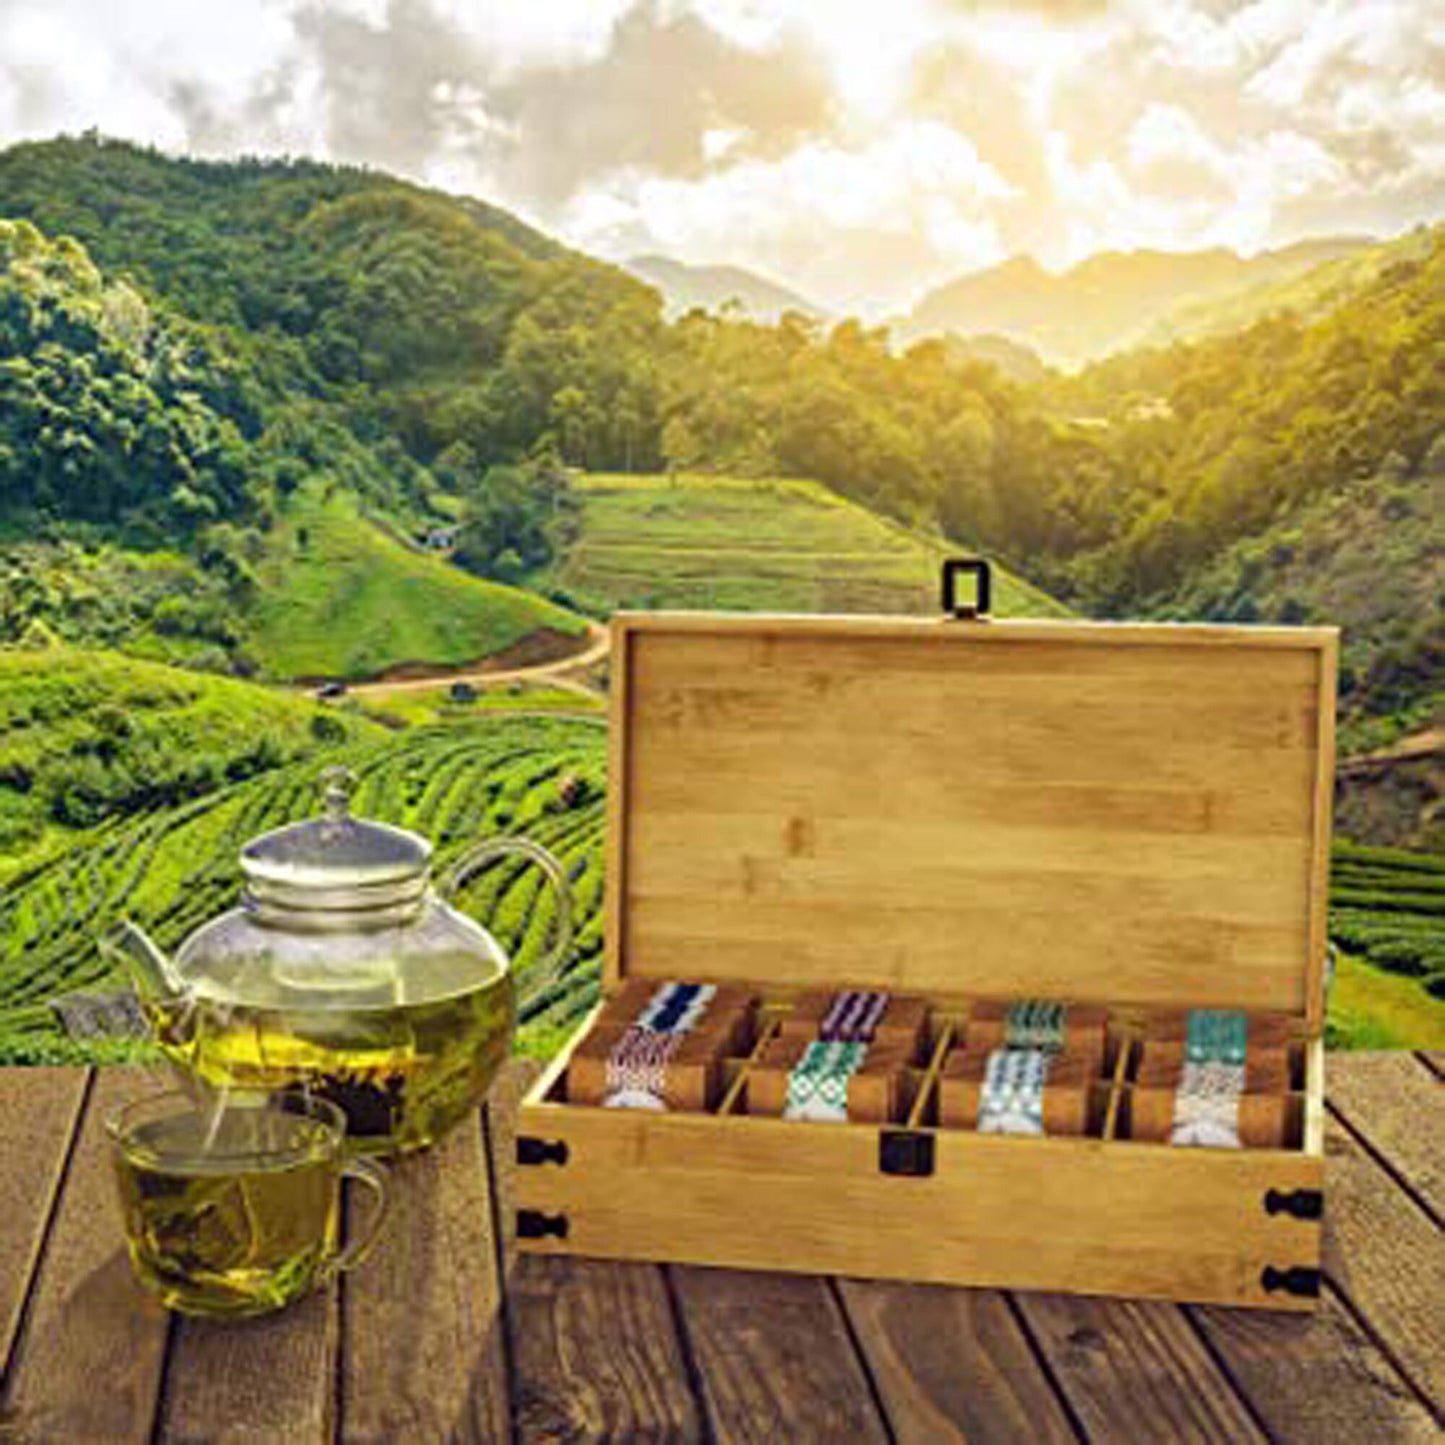 Buy Tea Chest 100% Natural Bamboo Wooden Tea Organizer Box - HOMAURA®